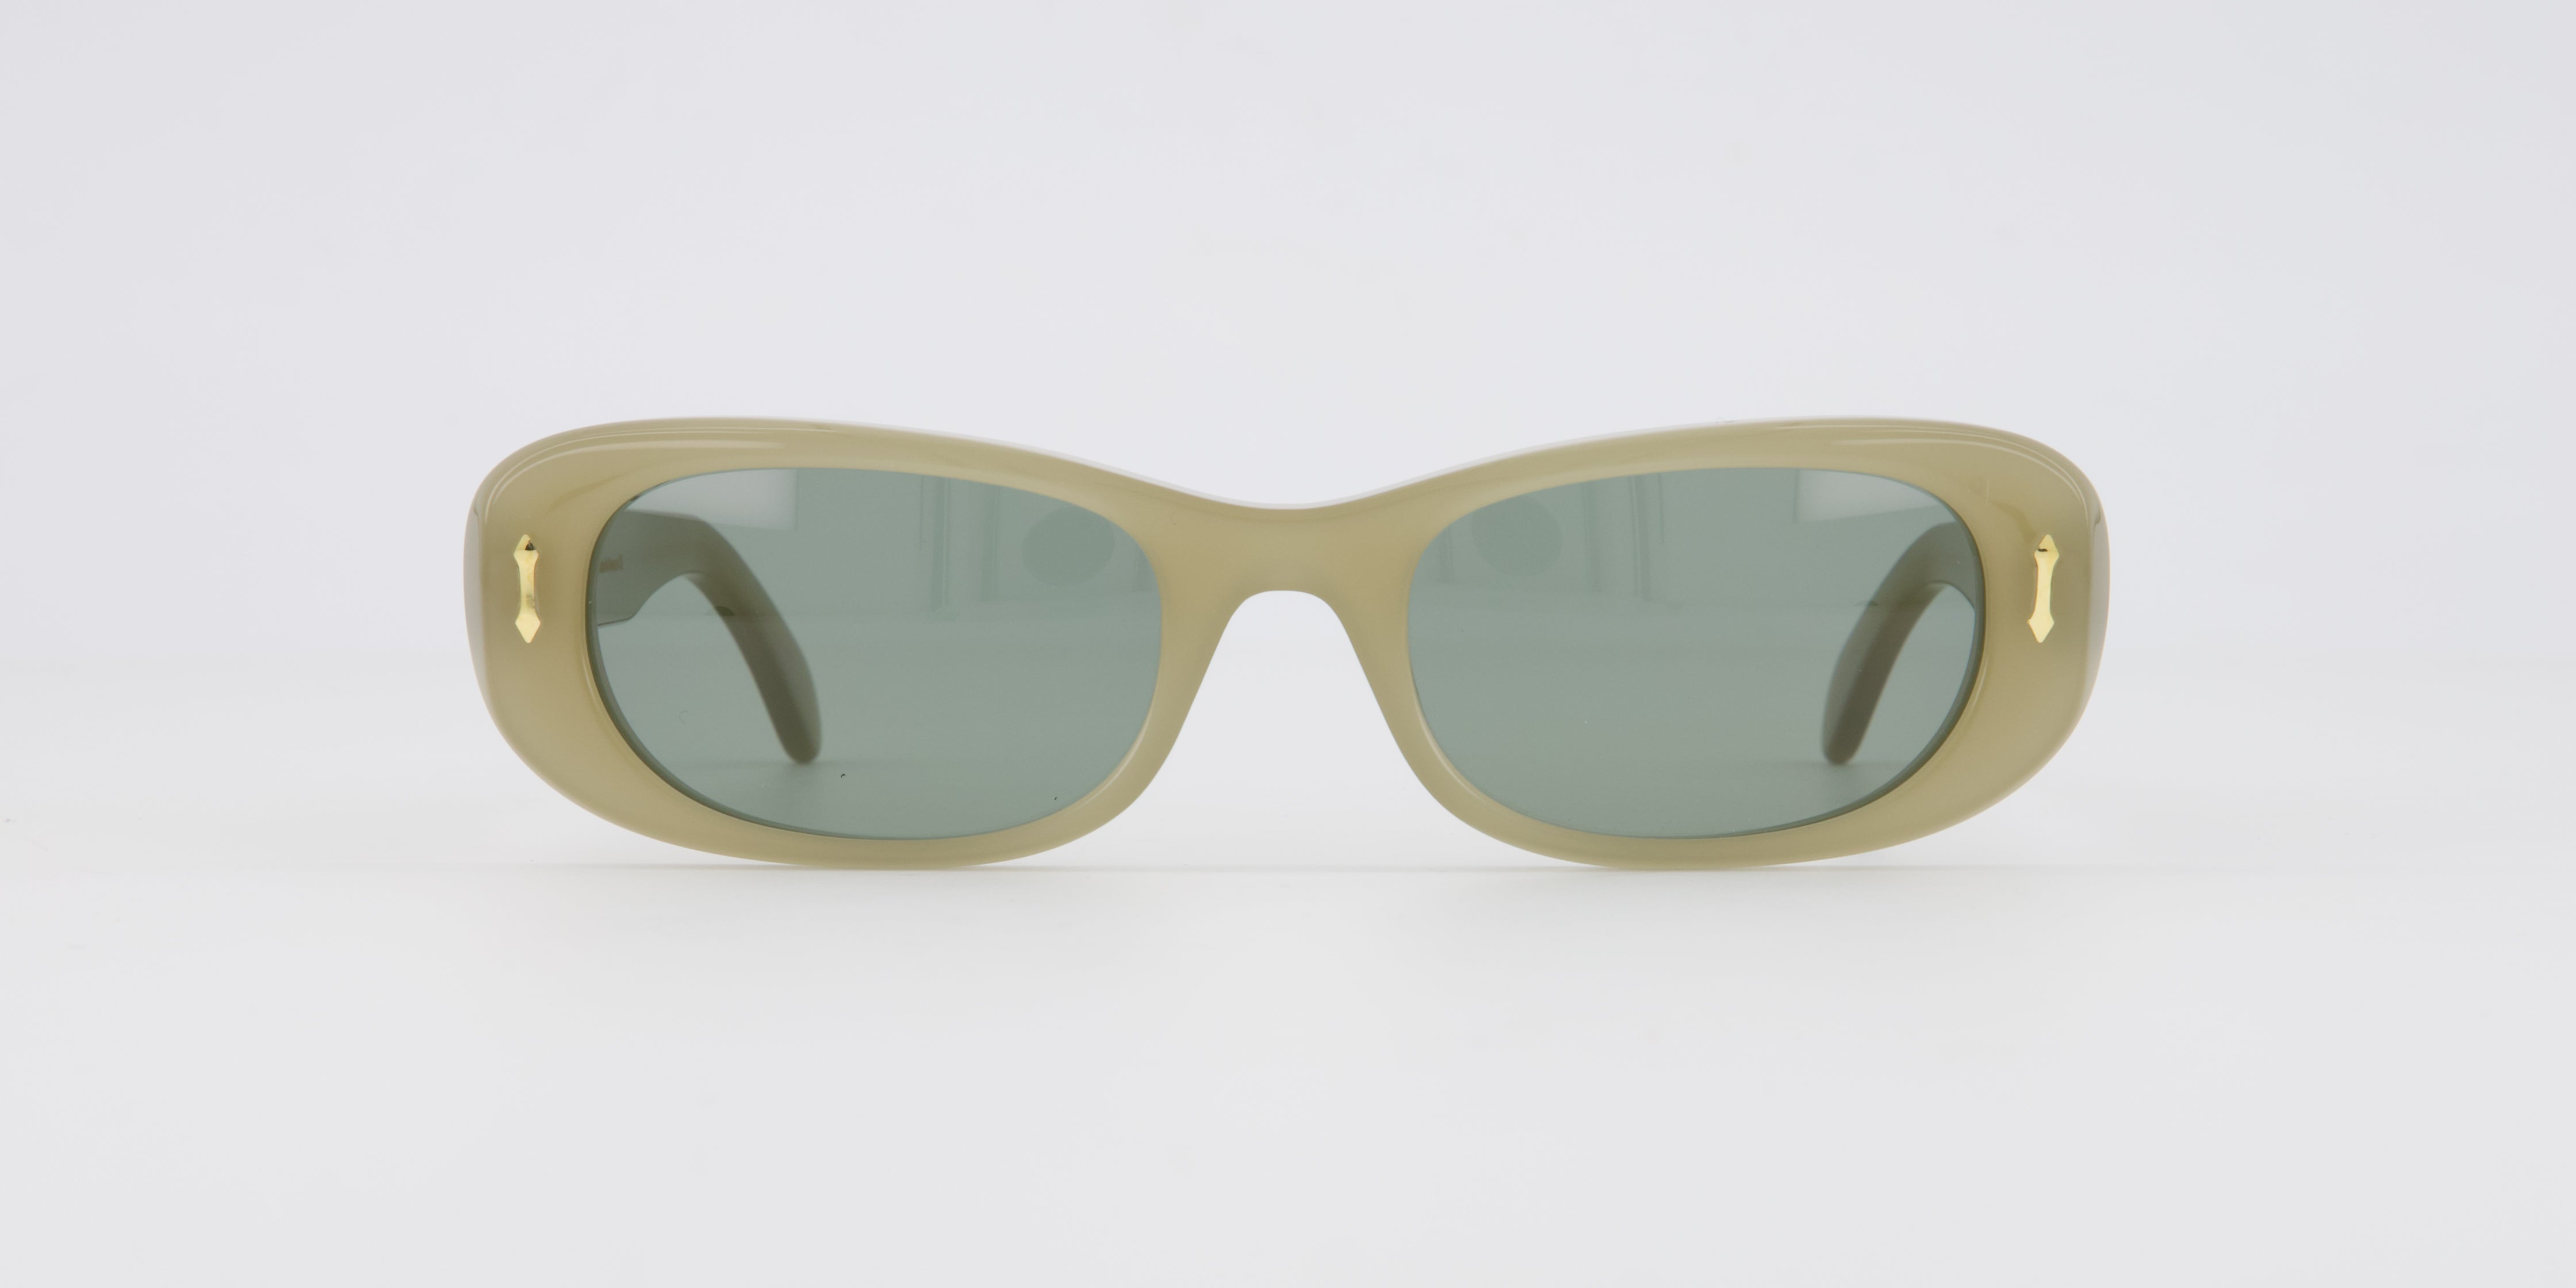 Delarge sunglasses Atkins Oyster